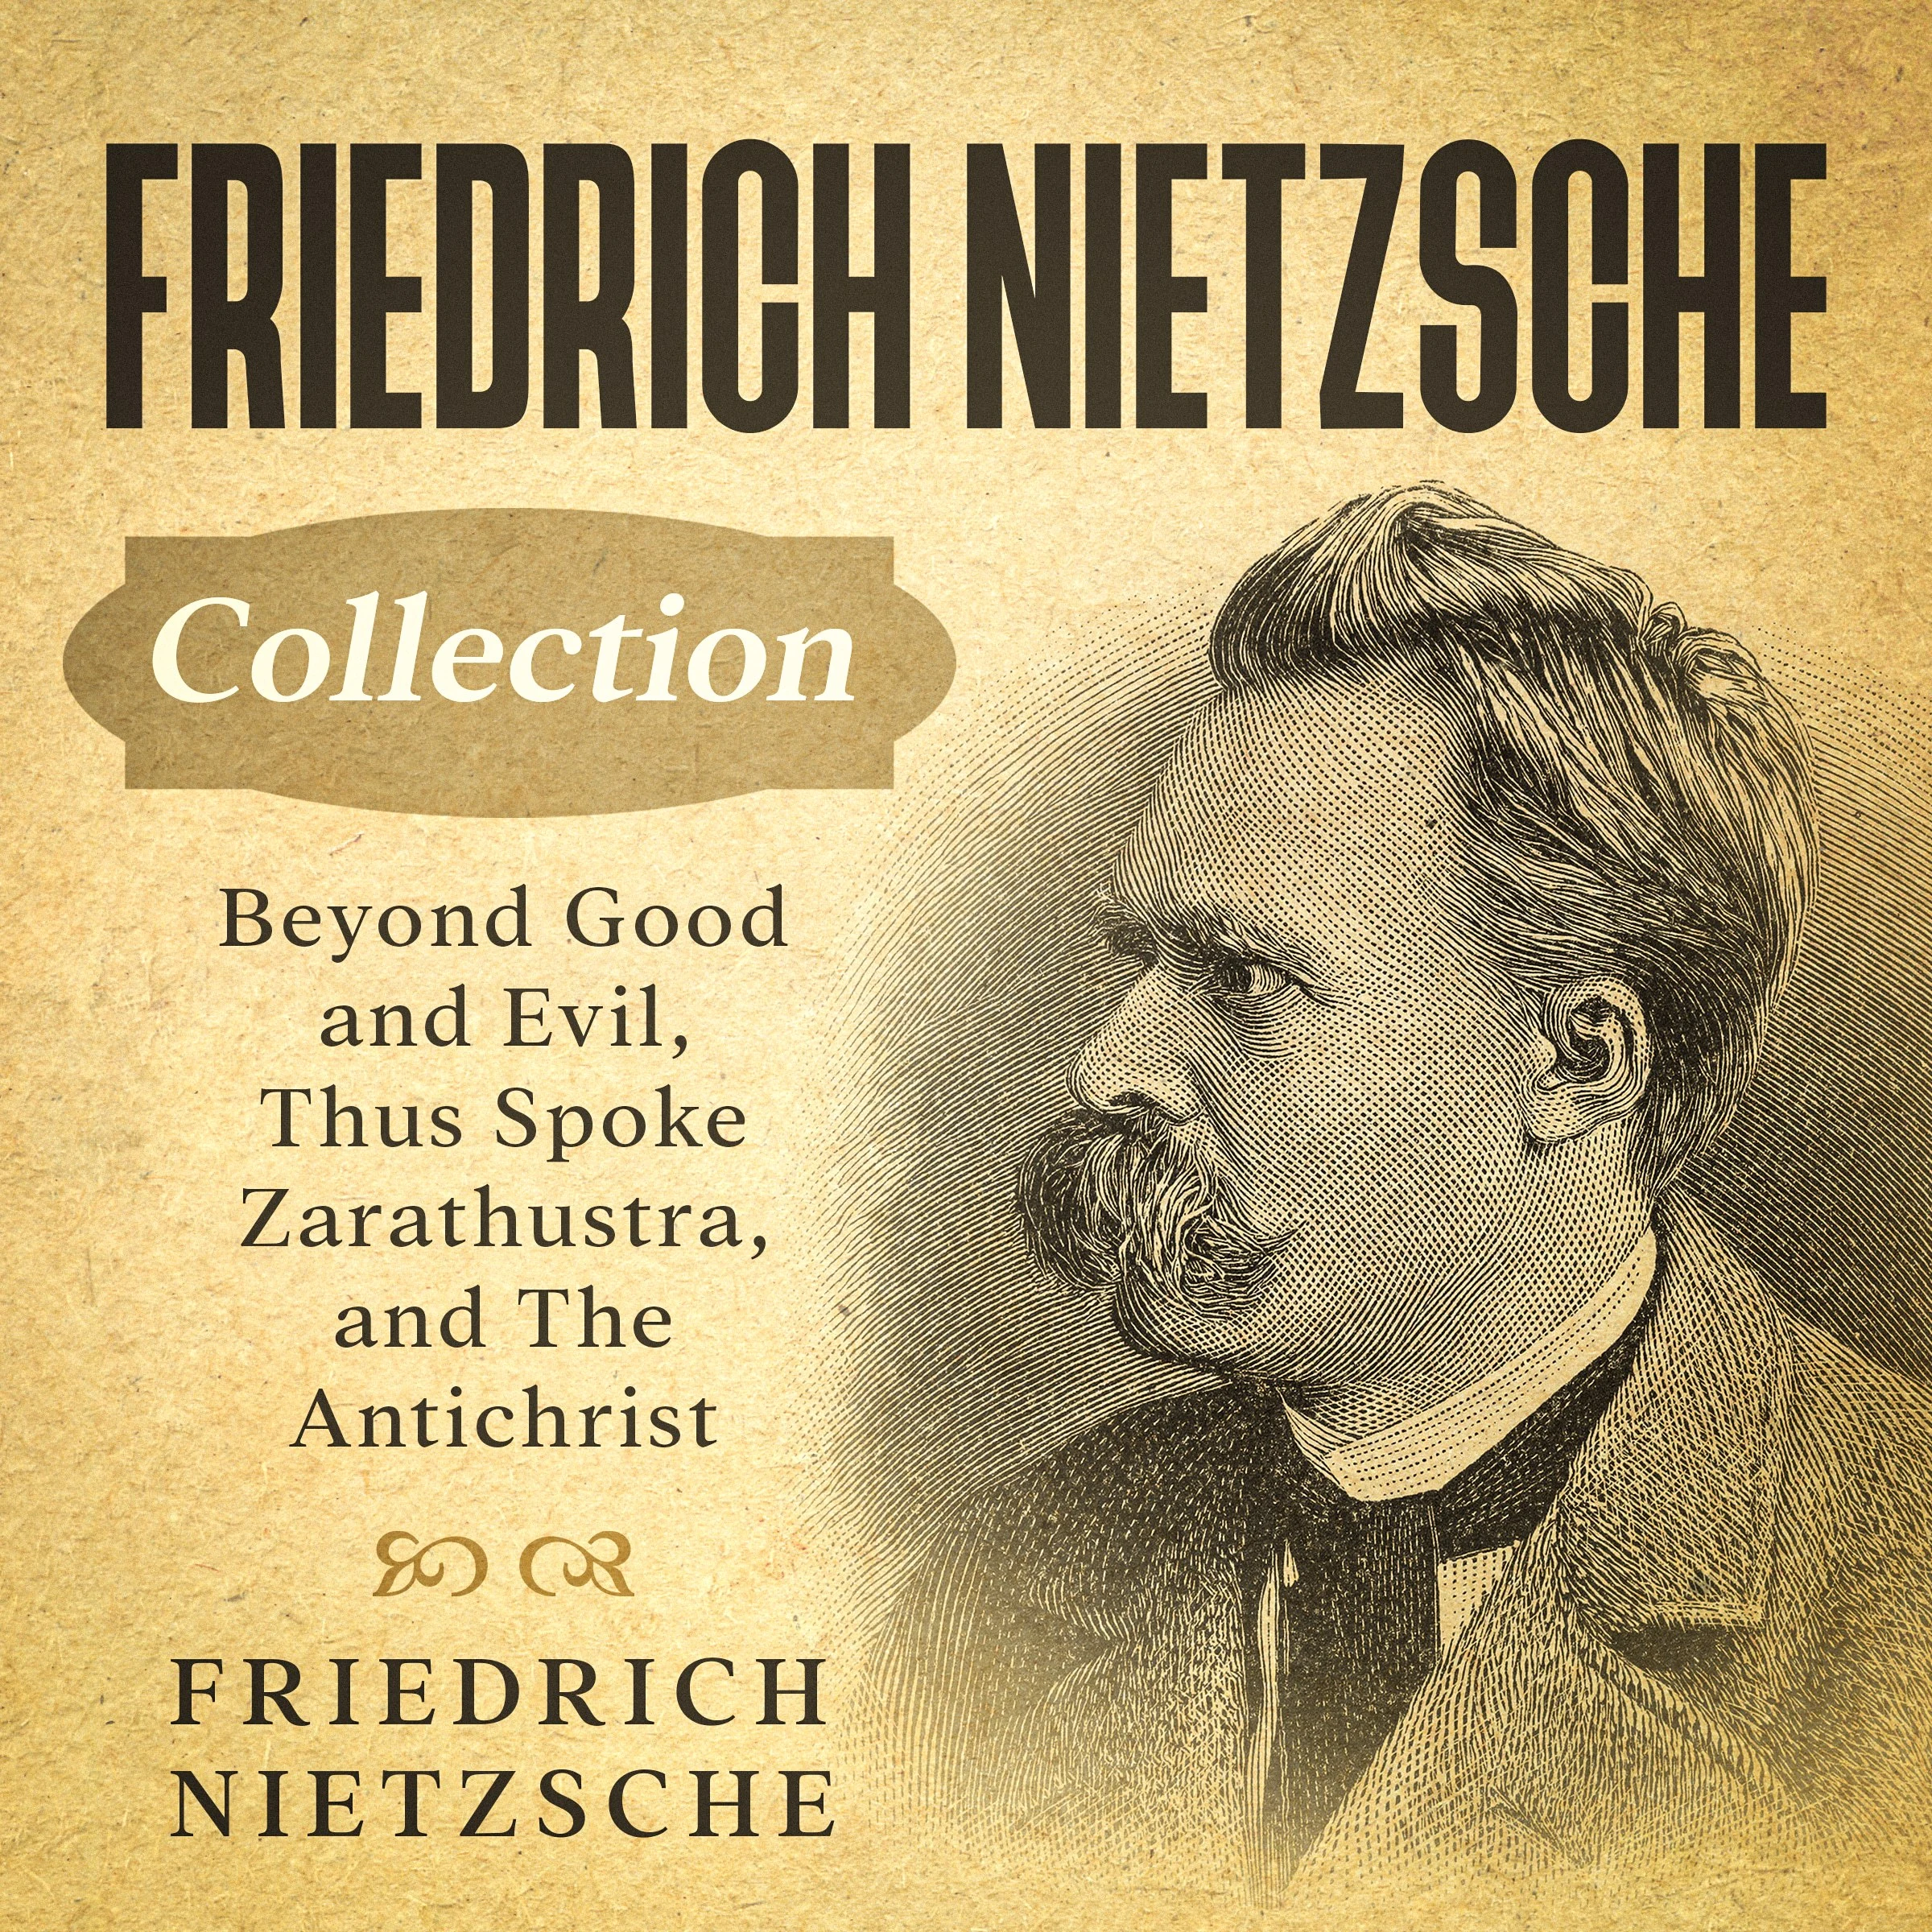 Friedrich Nietzsche Collection by Friedrich Nietzsche Audiobook